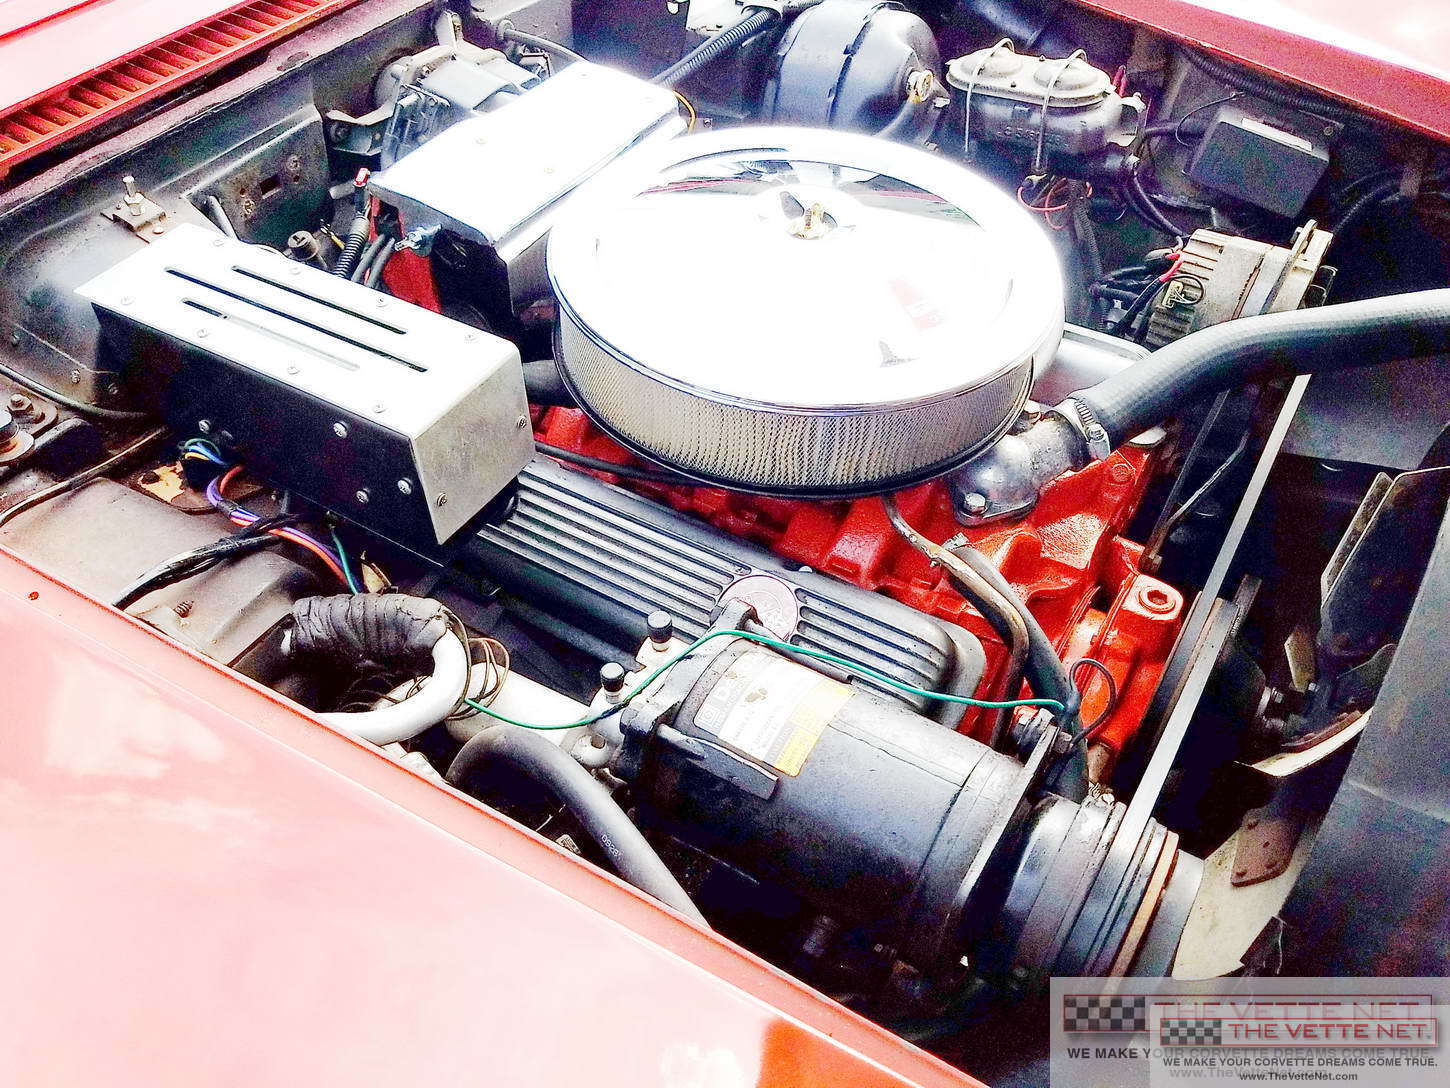 1970 Corvette T-Top Red